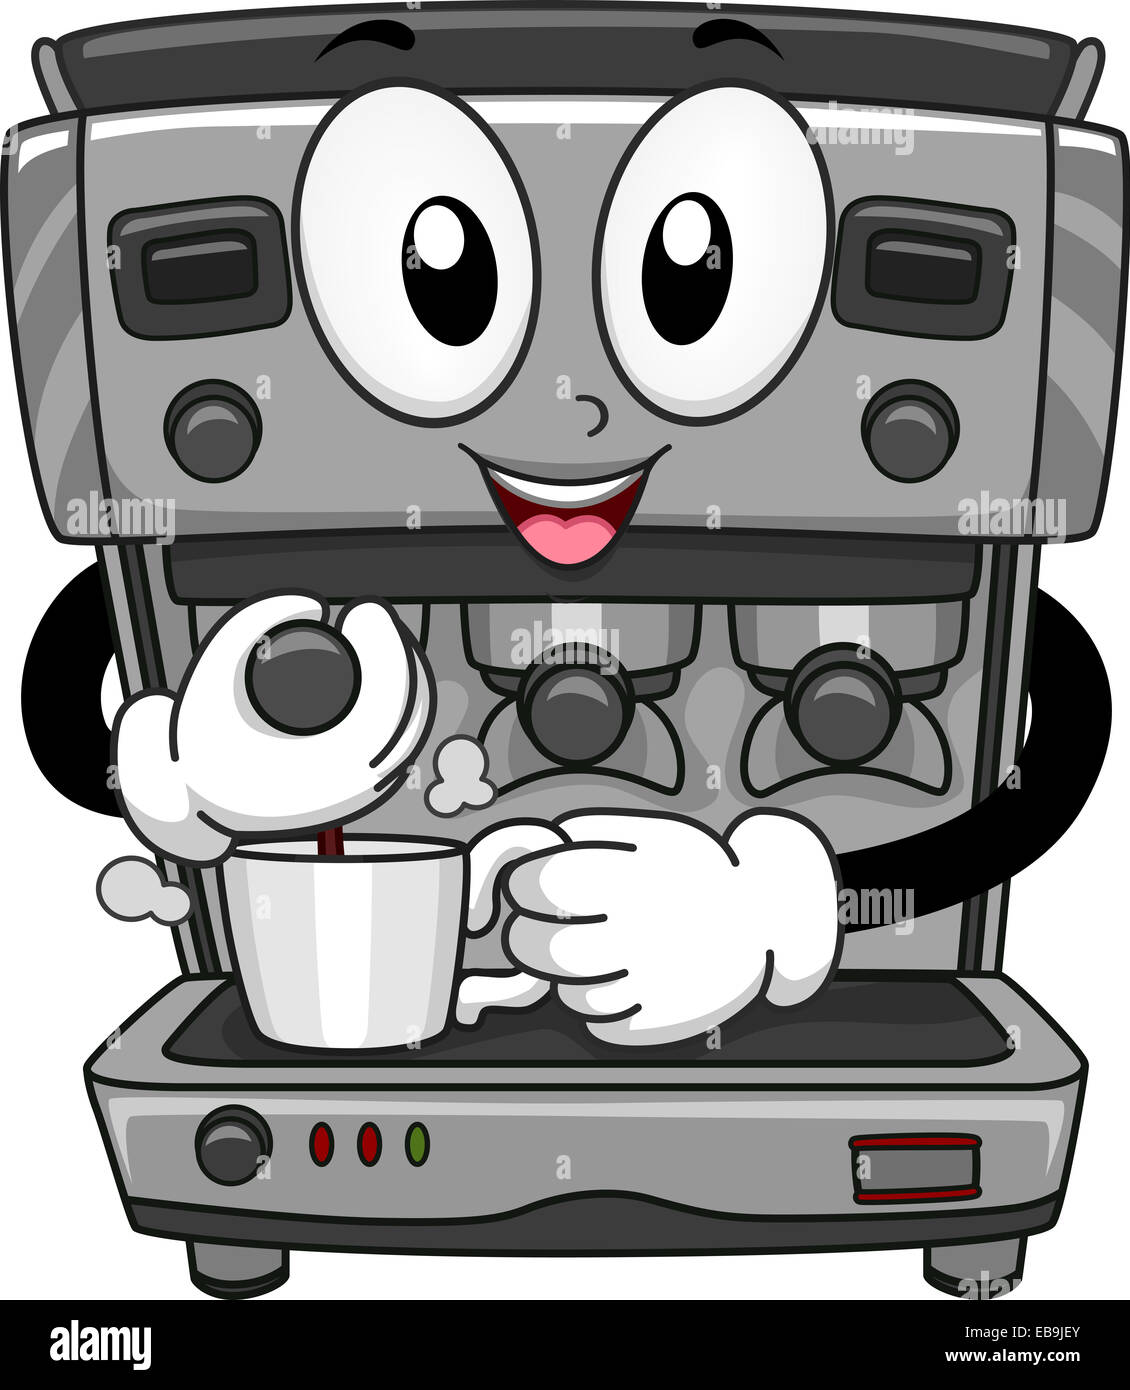 Mascot Illustration Featuring a Coffee Machine Dispensing Coffee Stock Photo